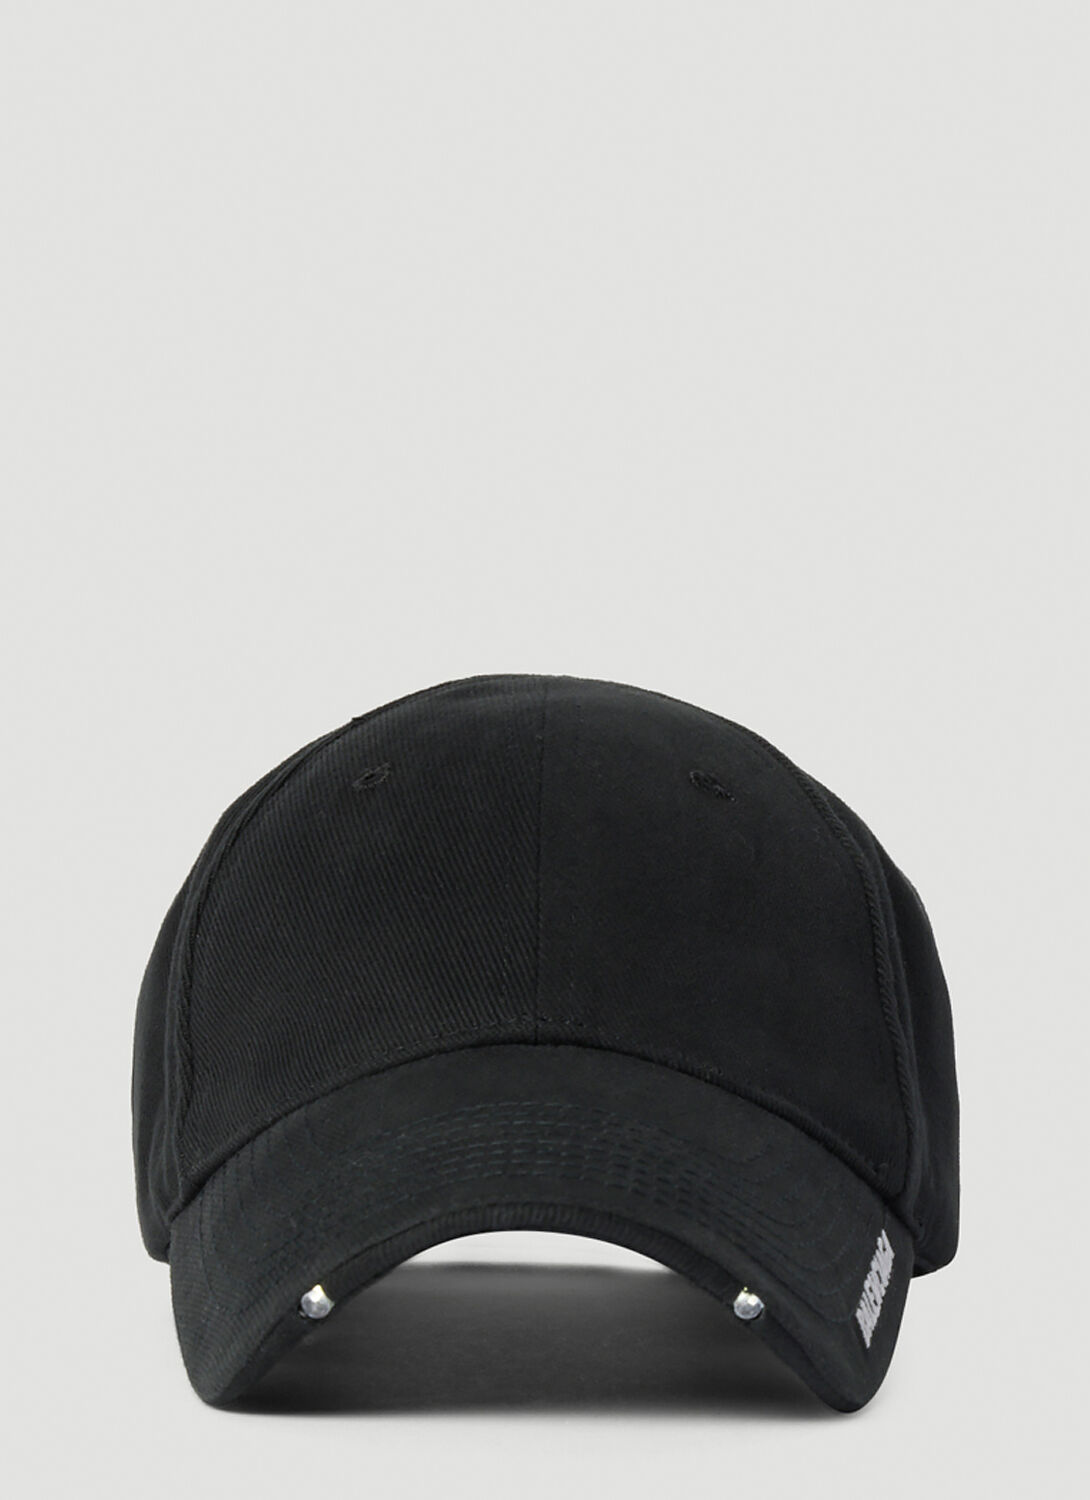 Balenciaga Led Light Baseball Cap In Black